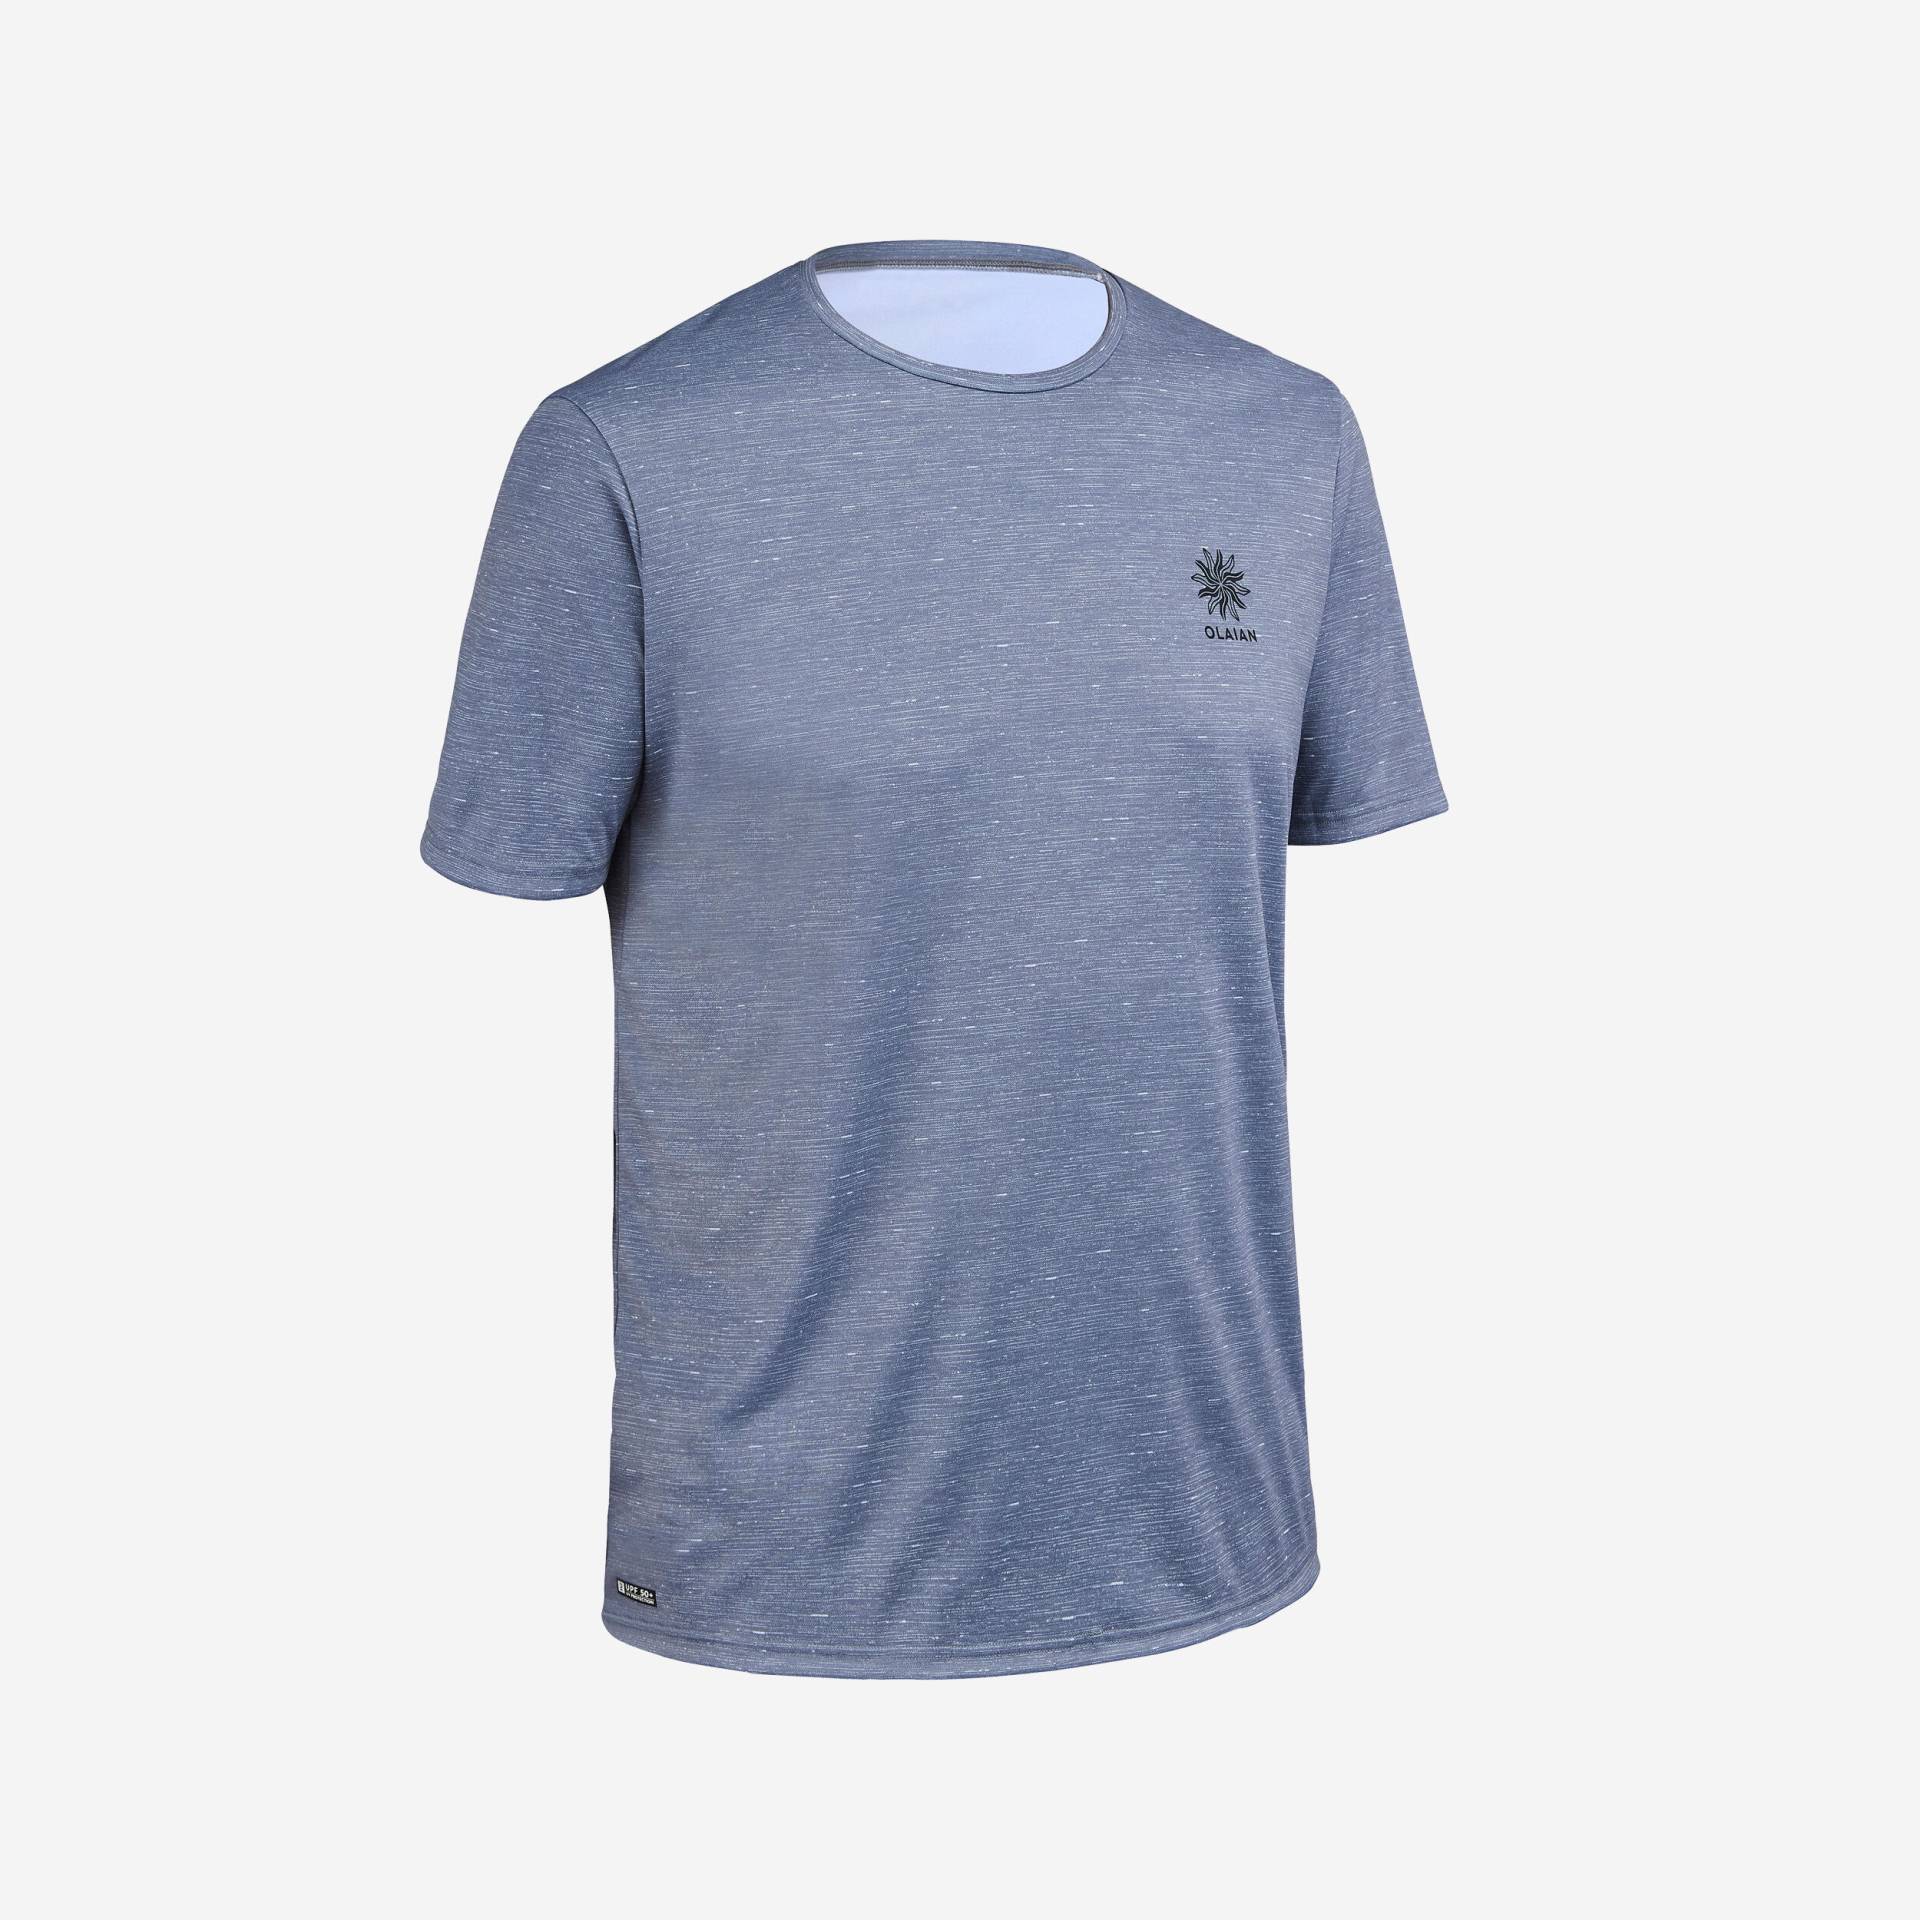 UV-Shirt Herren kurzarm - Print grau von OLAIAN